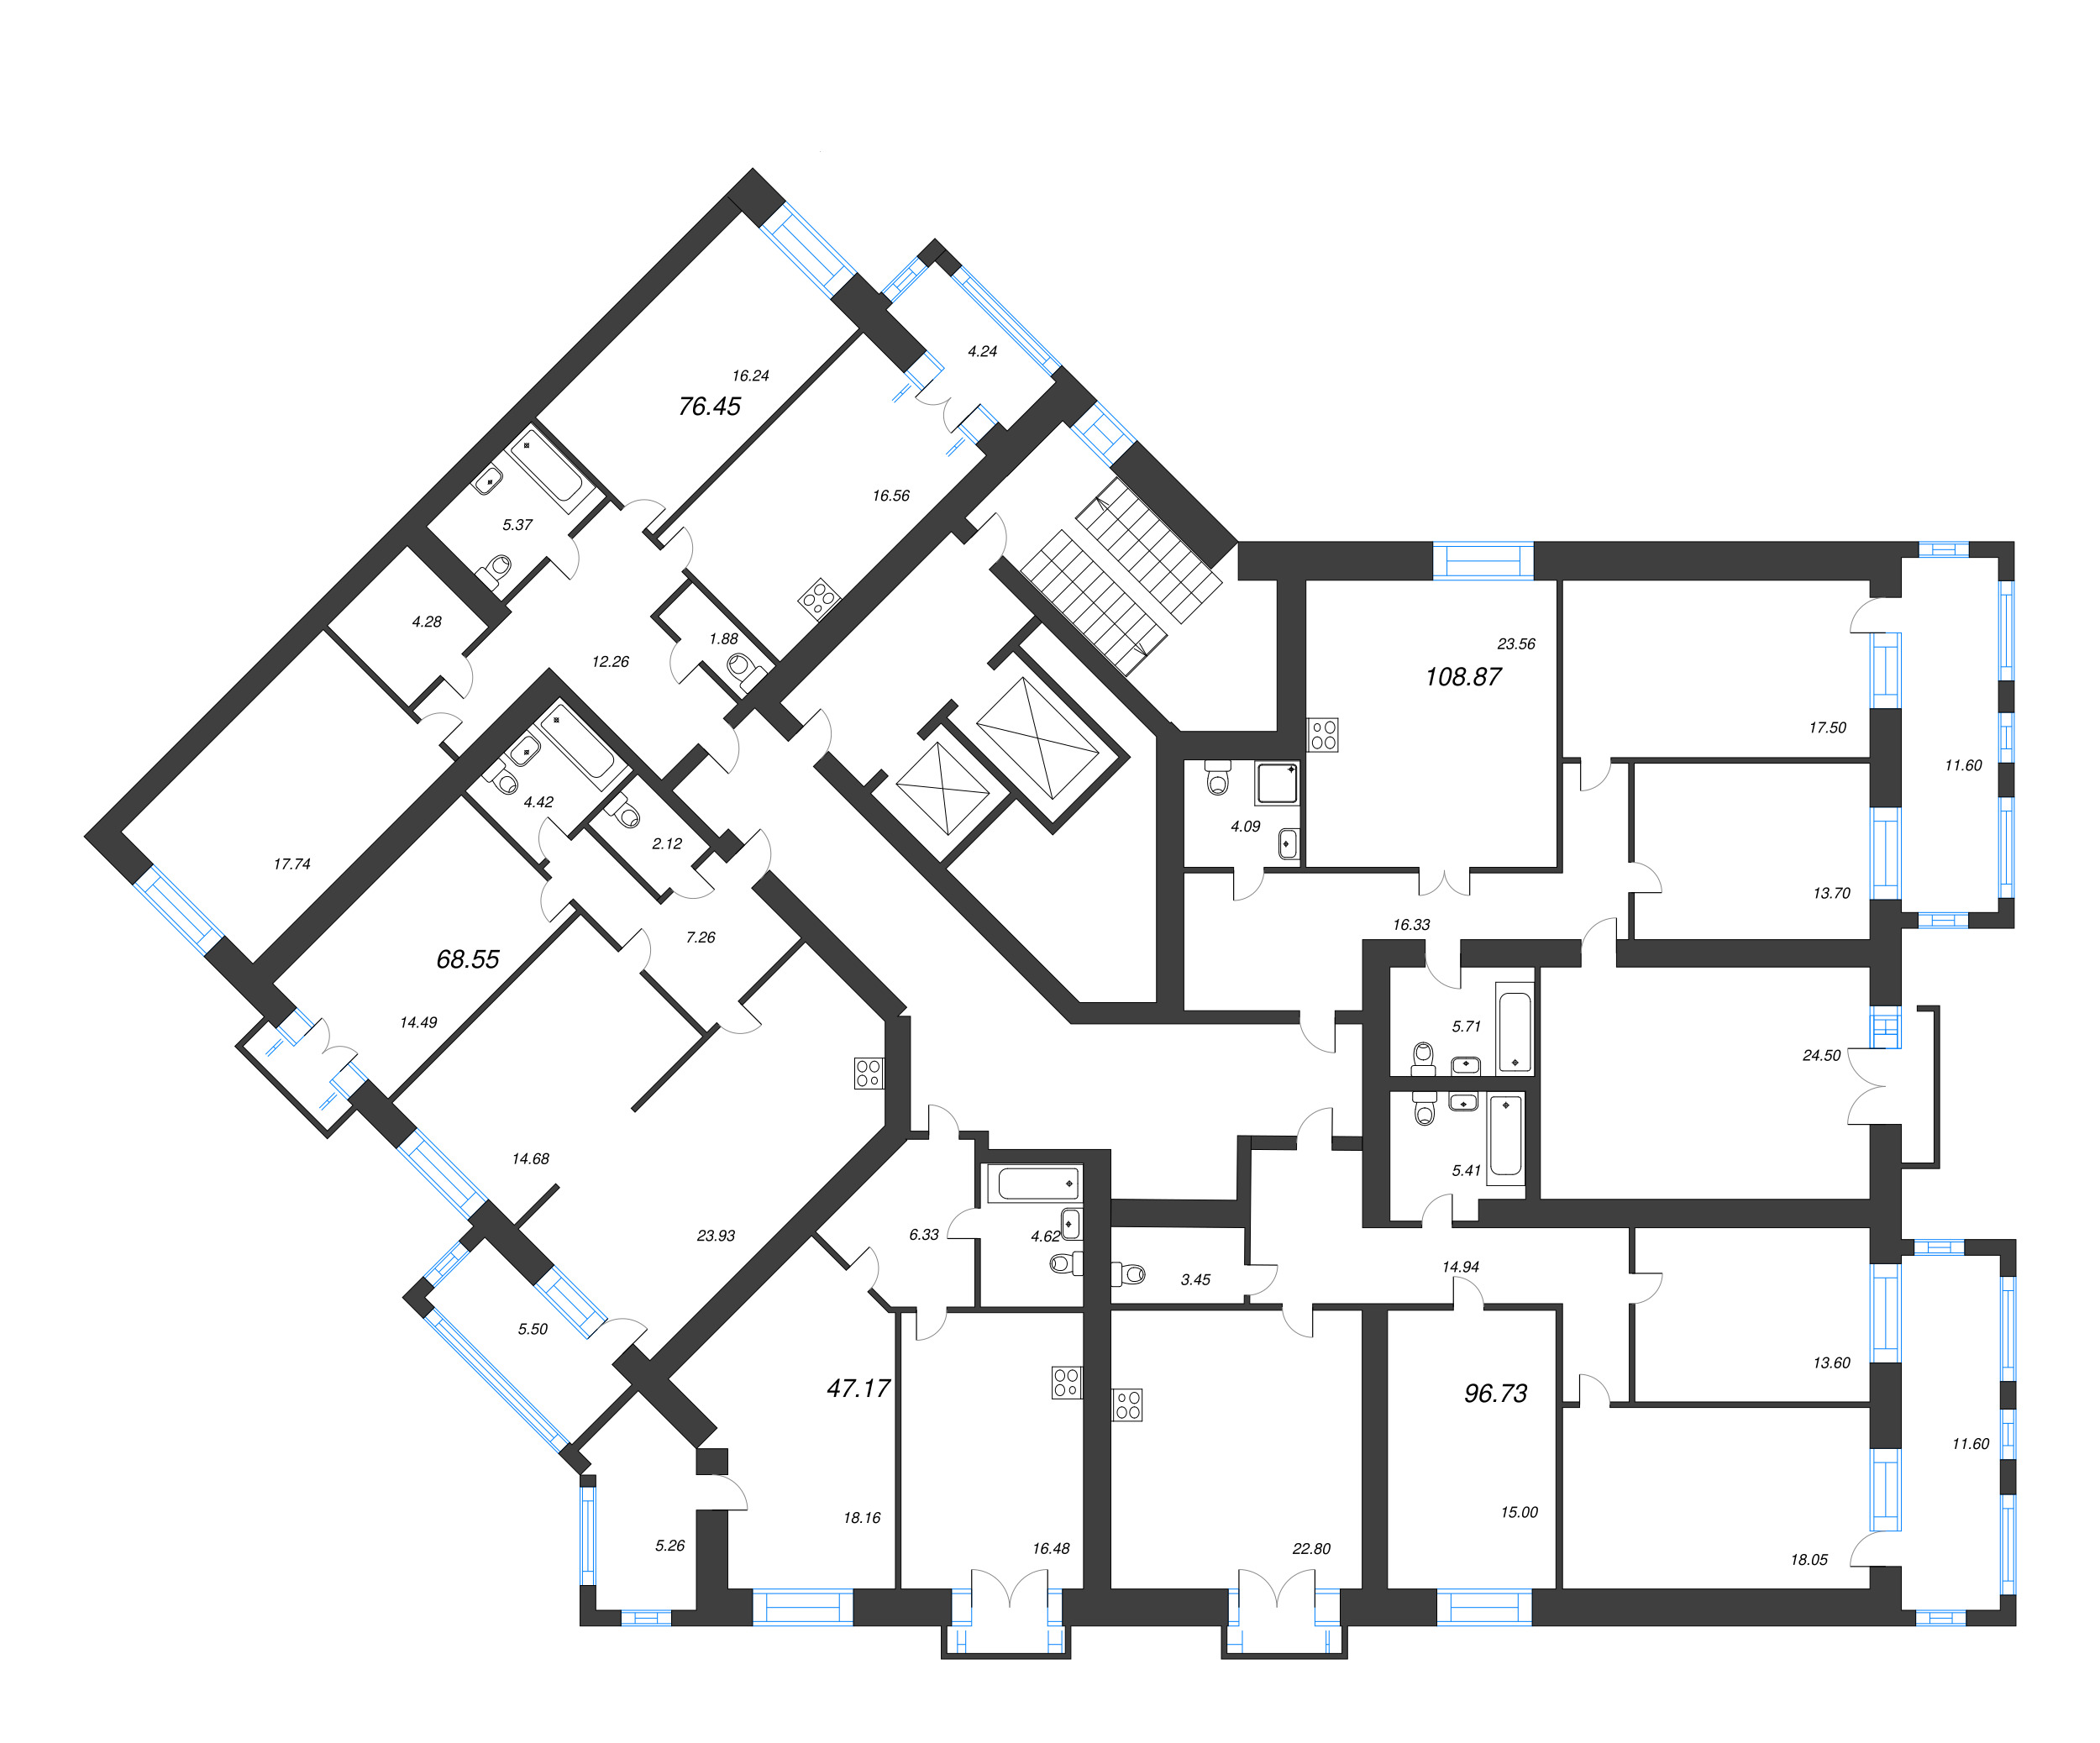 4-комнатная (Евро) квартира, 96.2 м² - планировка этажа